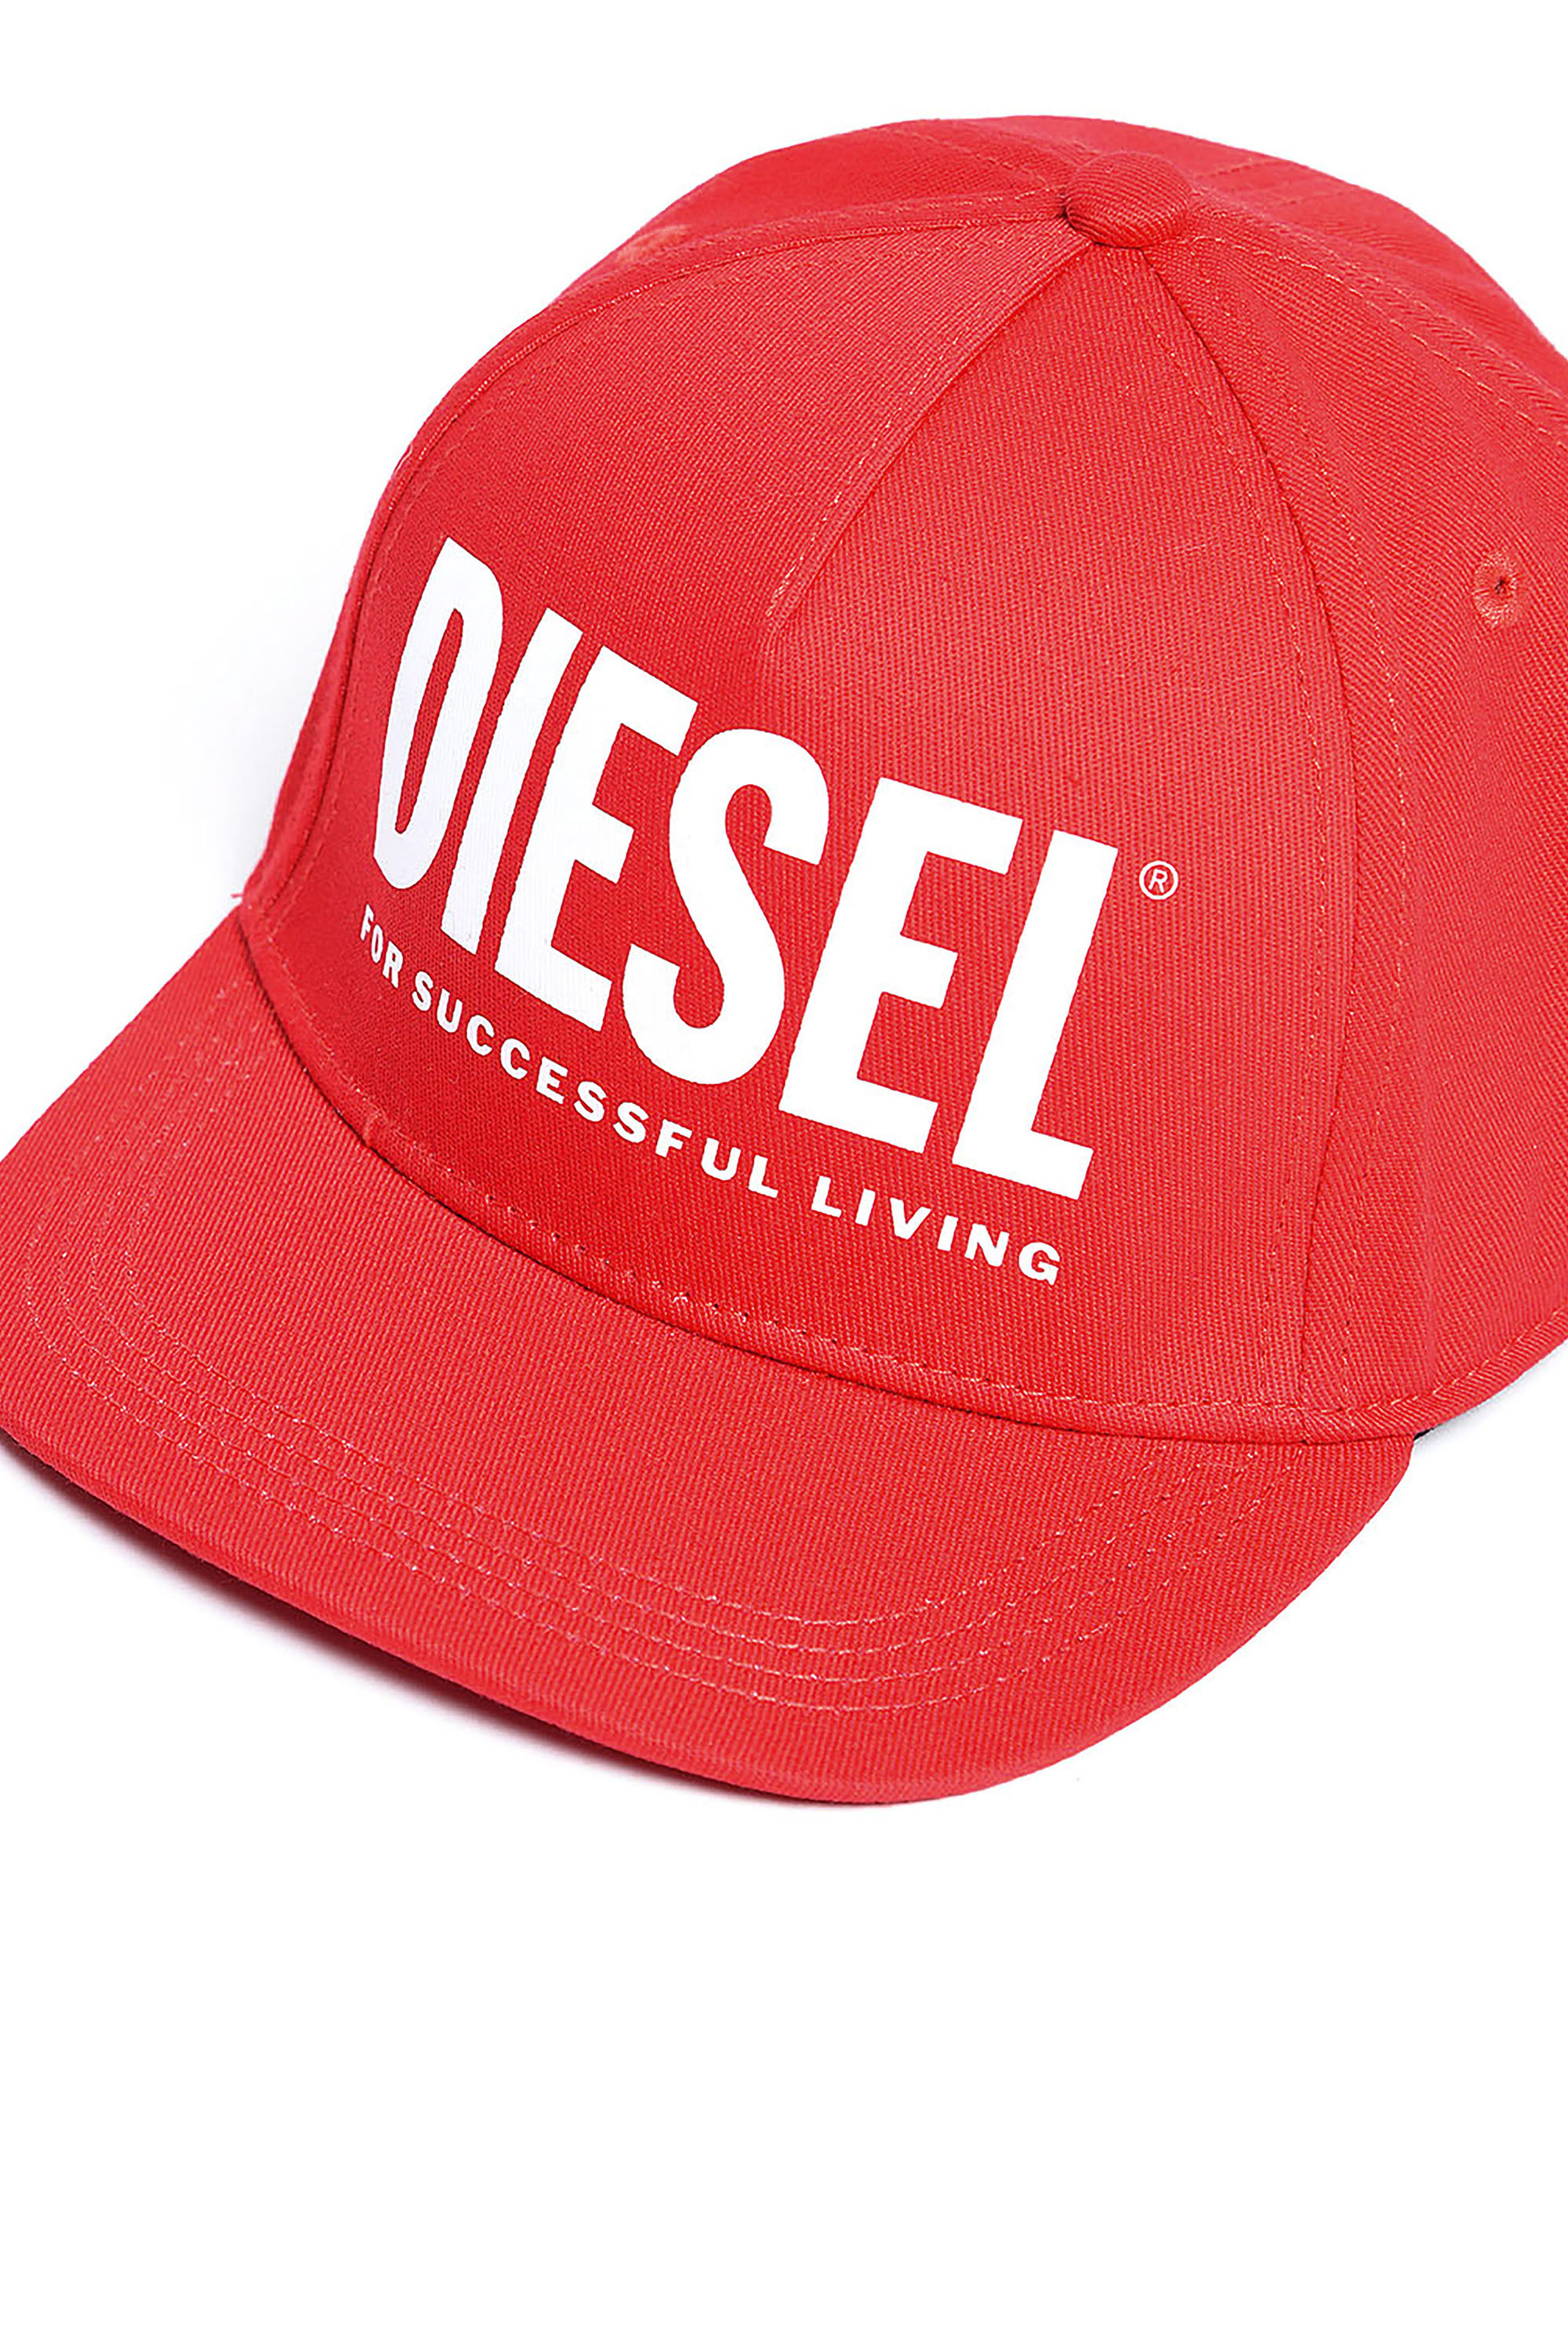 Diesel - FOLLY, Red - Image 3